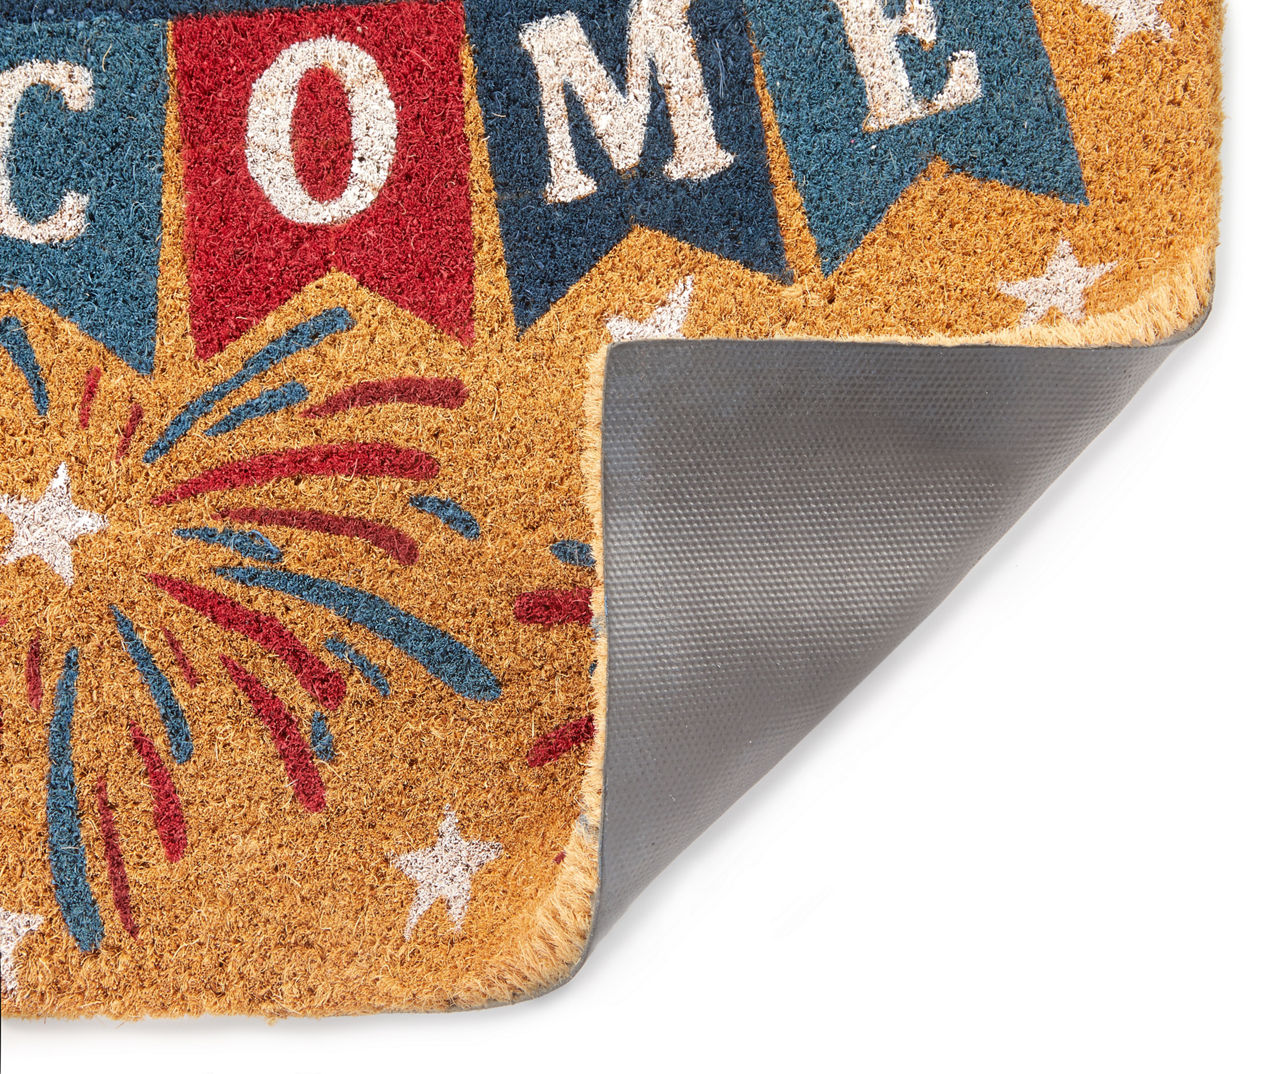 Buy: Road Trip Doormat Fourth of July Art Patriotic